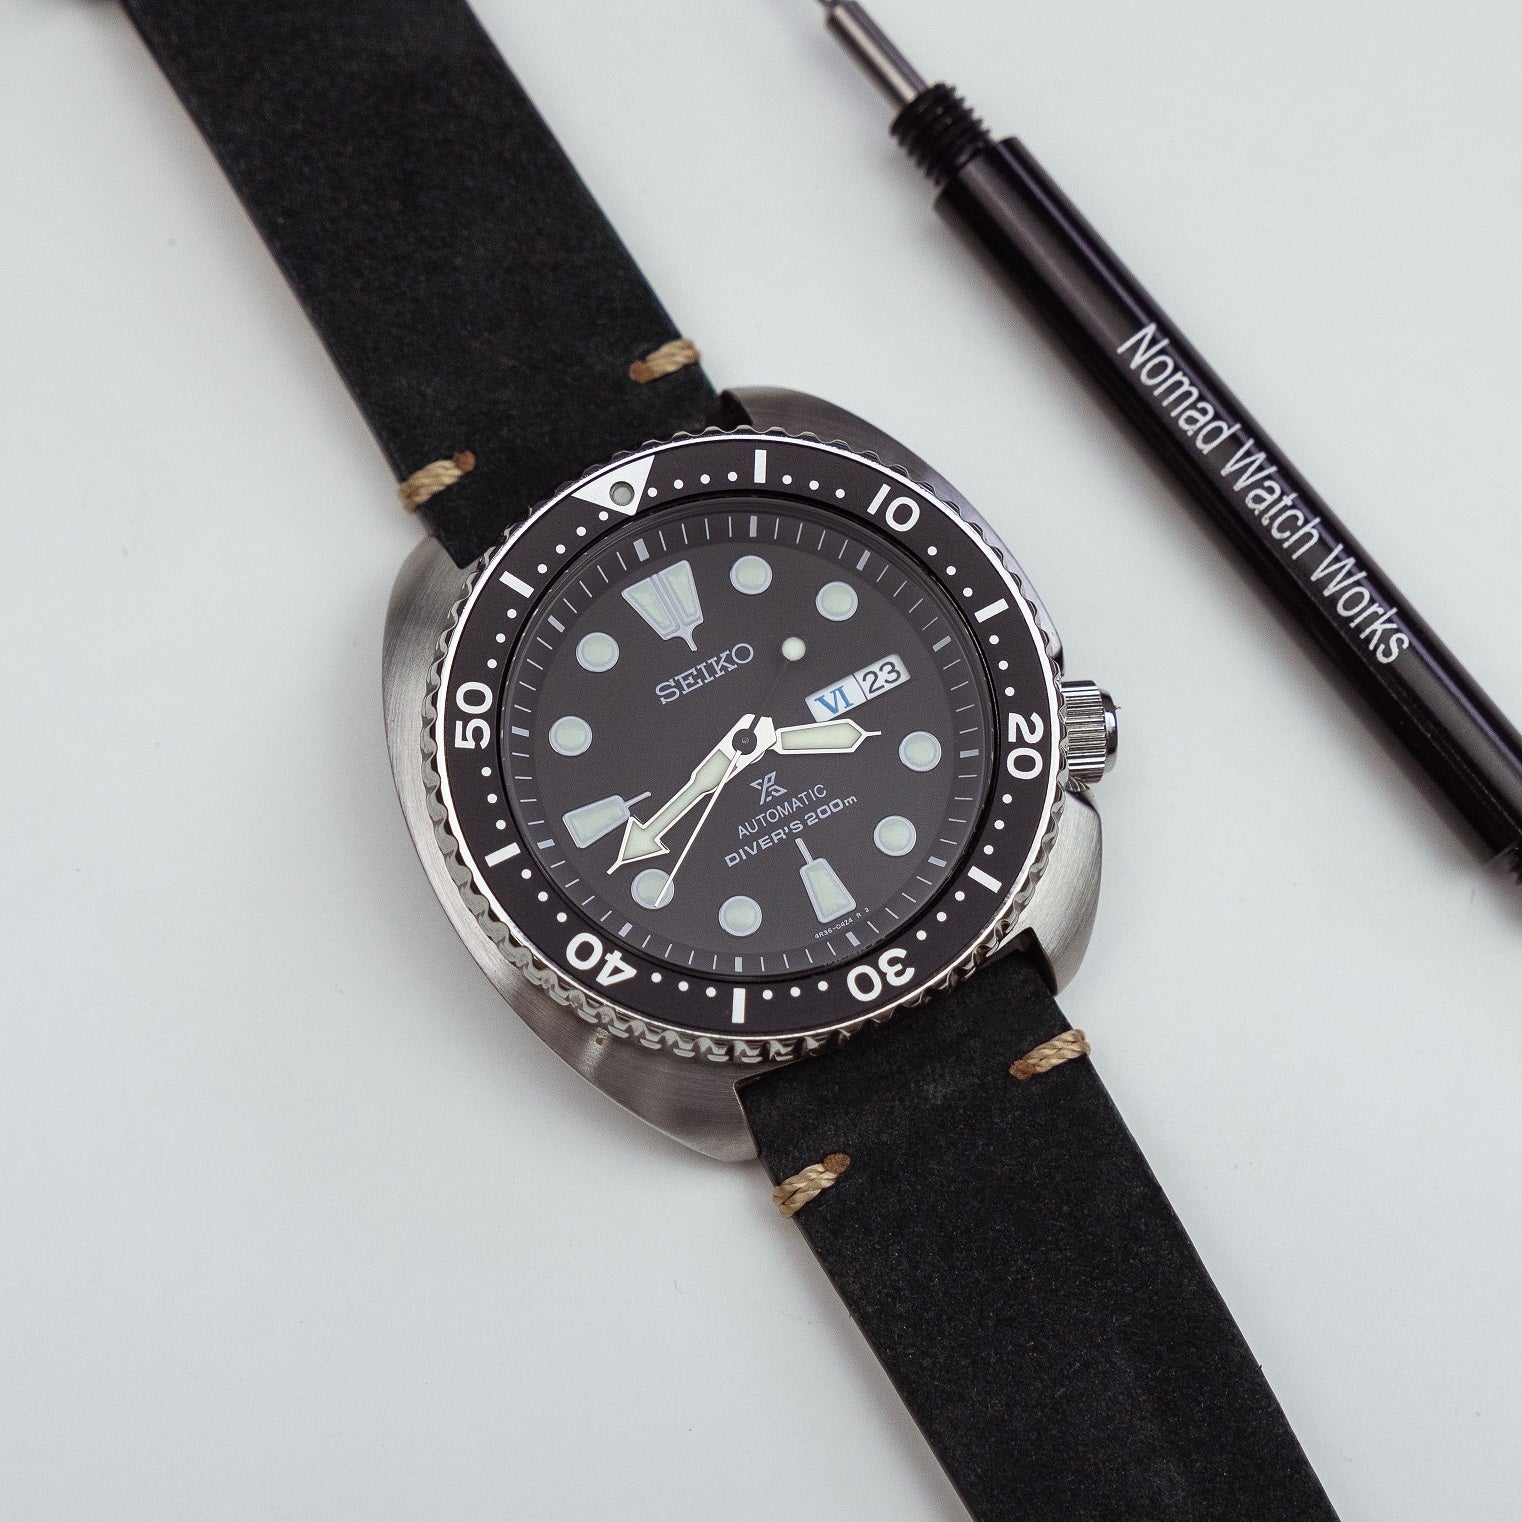 Premium Vintage Suede Leather Watch Strap in Black (18mm) - Nomad Watch Works SG